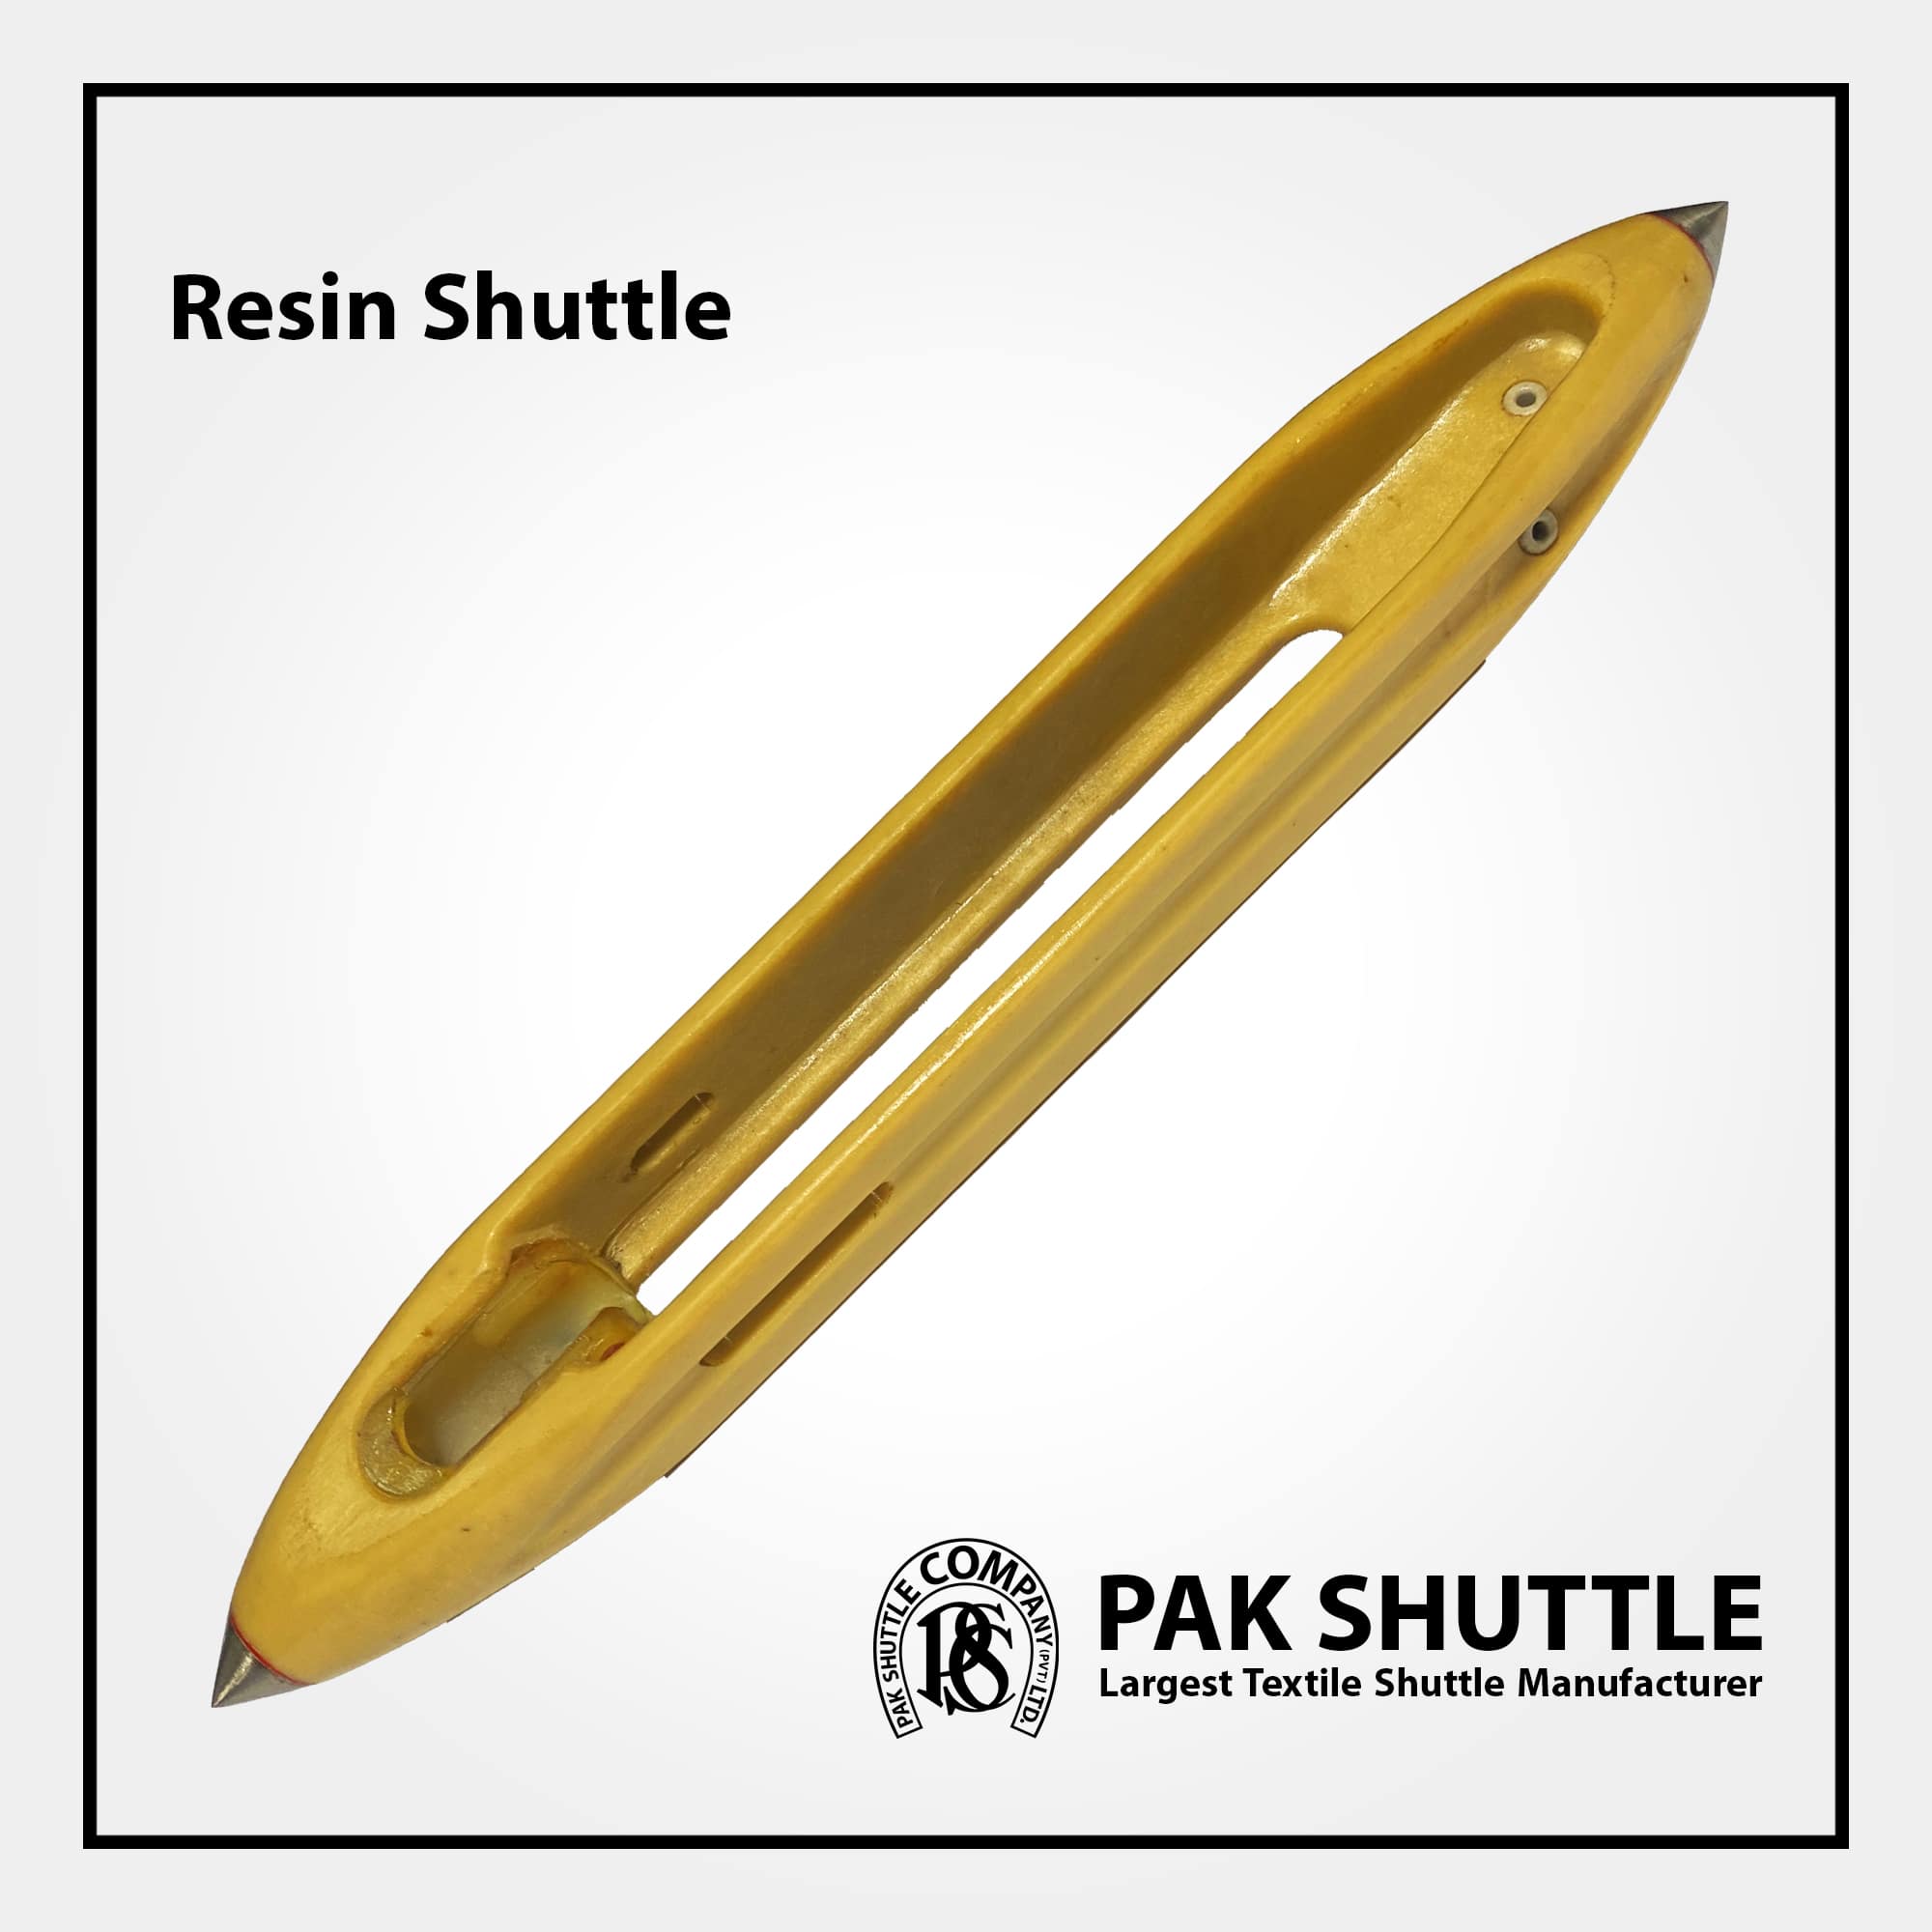 Resin Shuttle by Pak Shuttle Company Pvt Ltd.